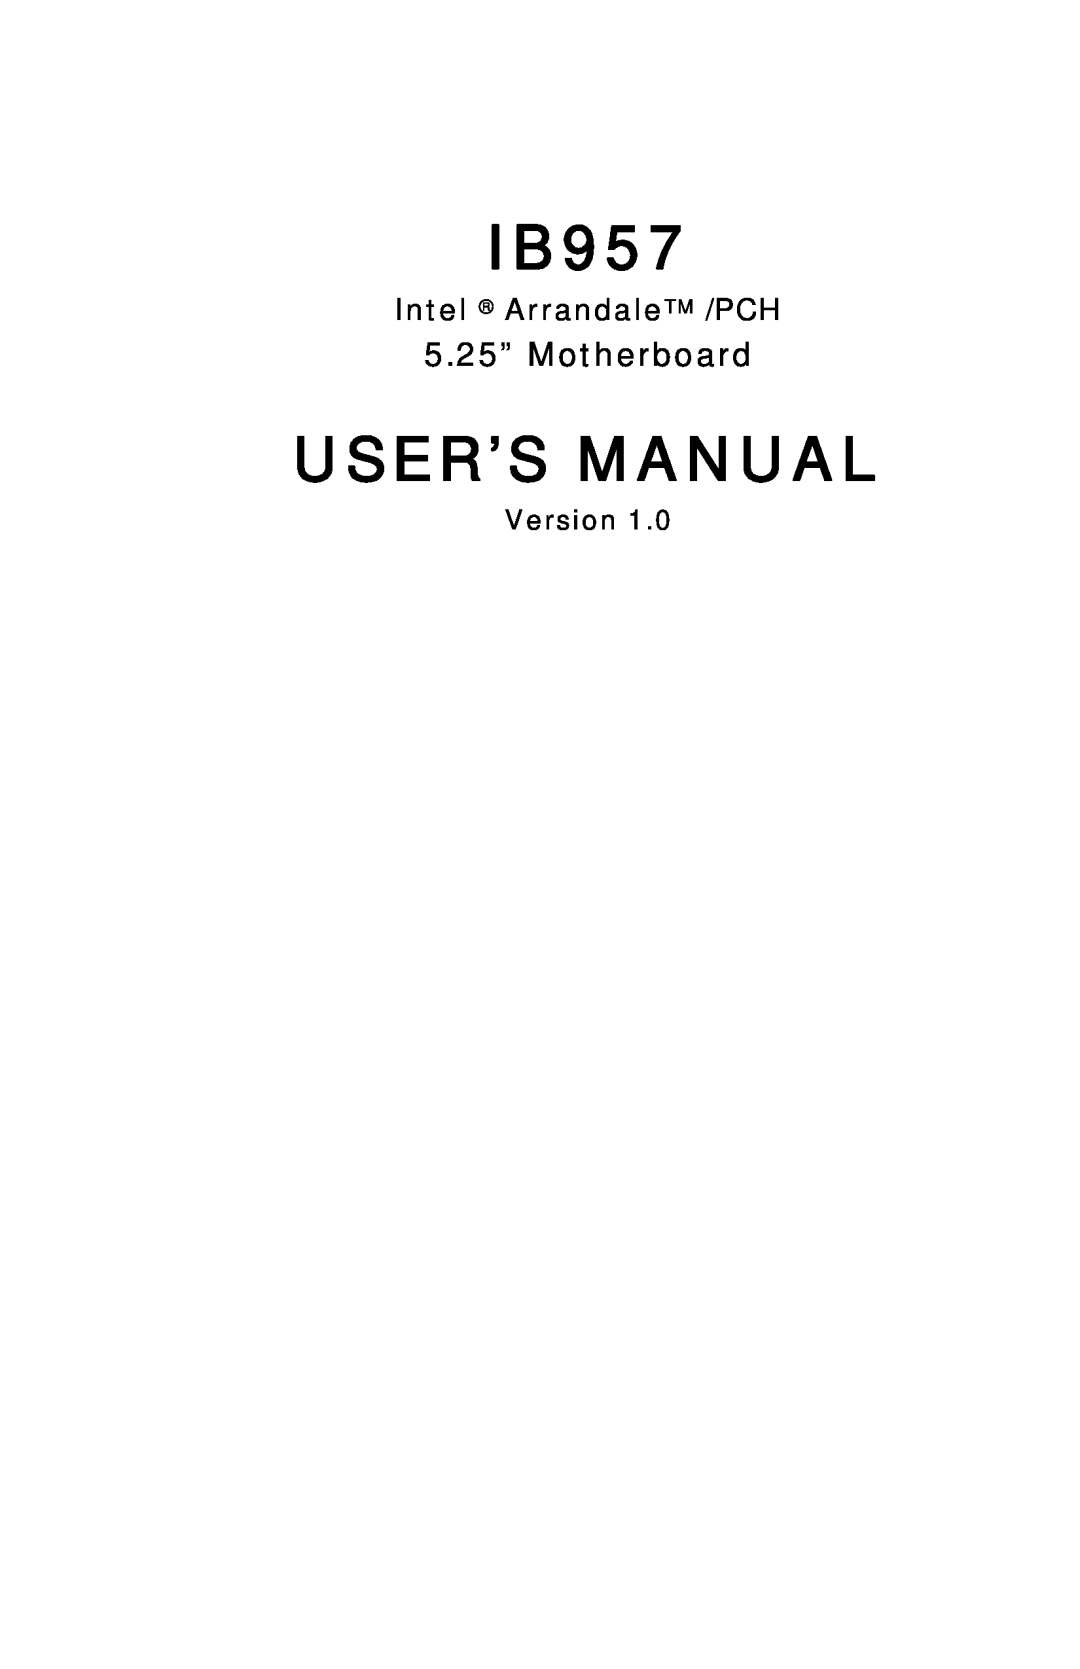 Intel IB957 user manual 5.25” Motherboard, Intel ArrandaleTM /PCH, Version, User’S Manual 